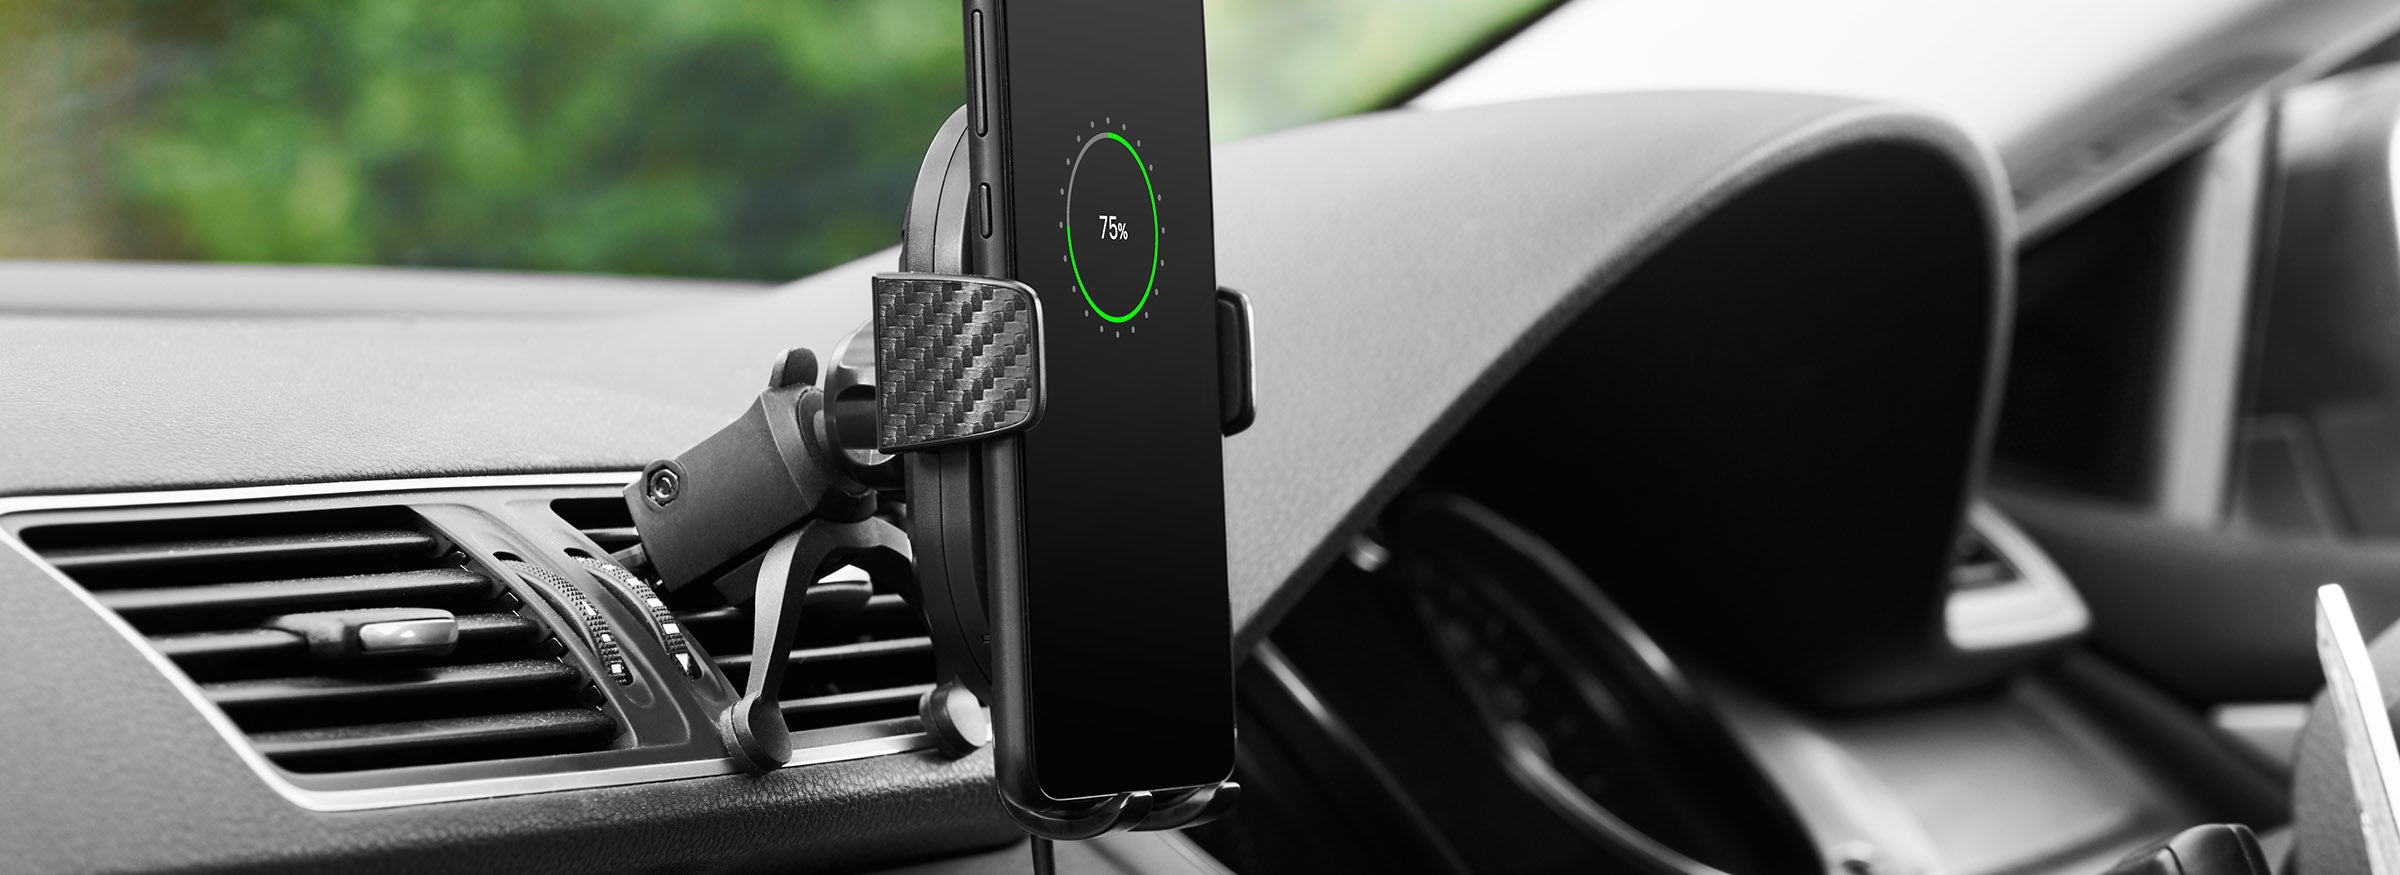 ttec EasyDrive Pro In-Car Phone Holder